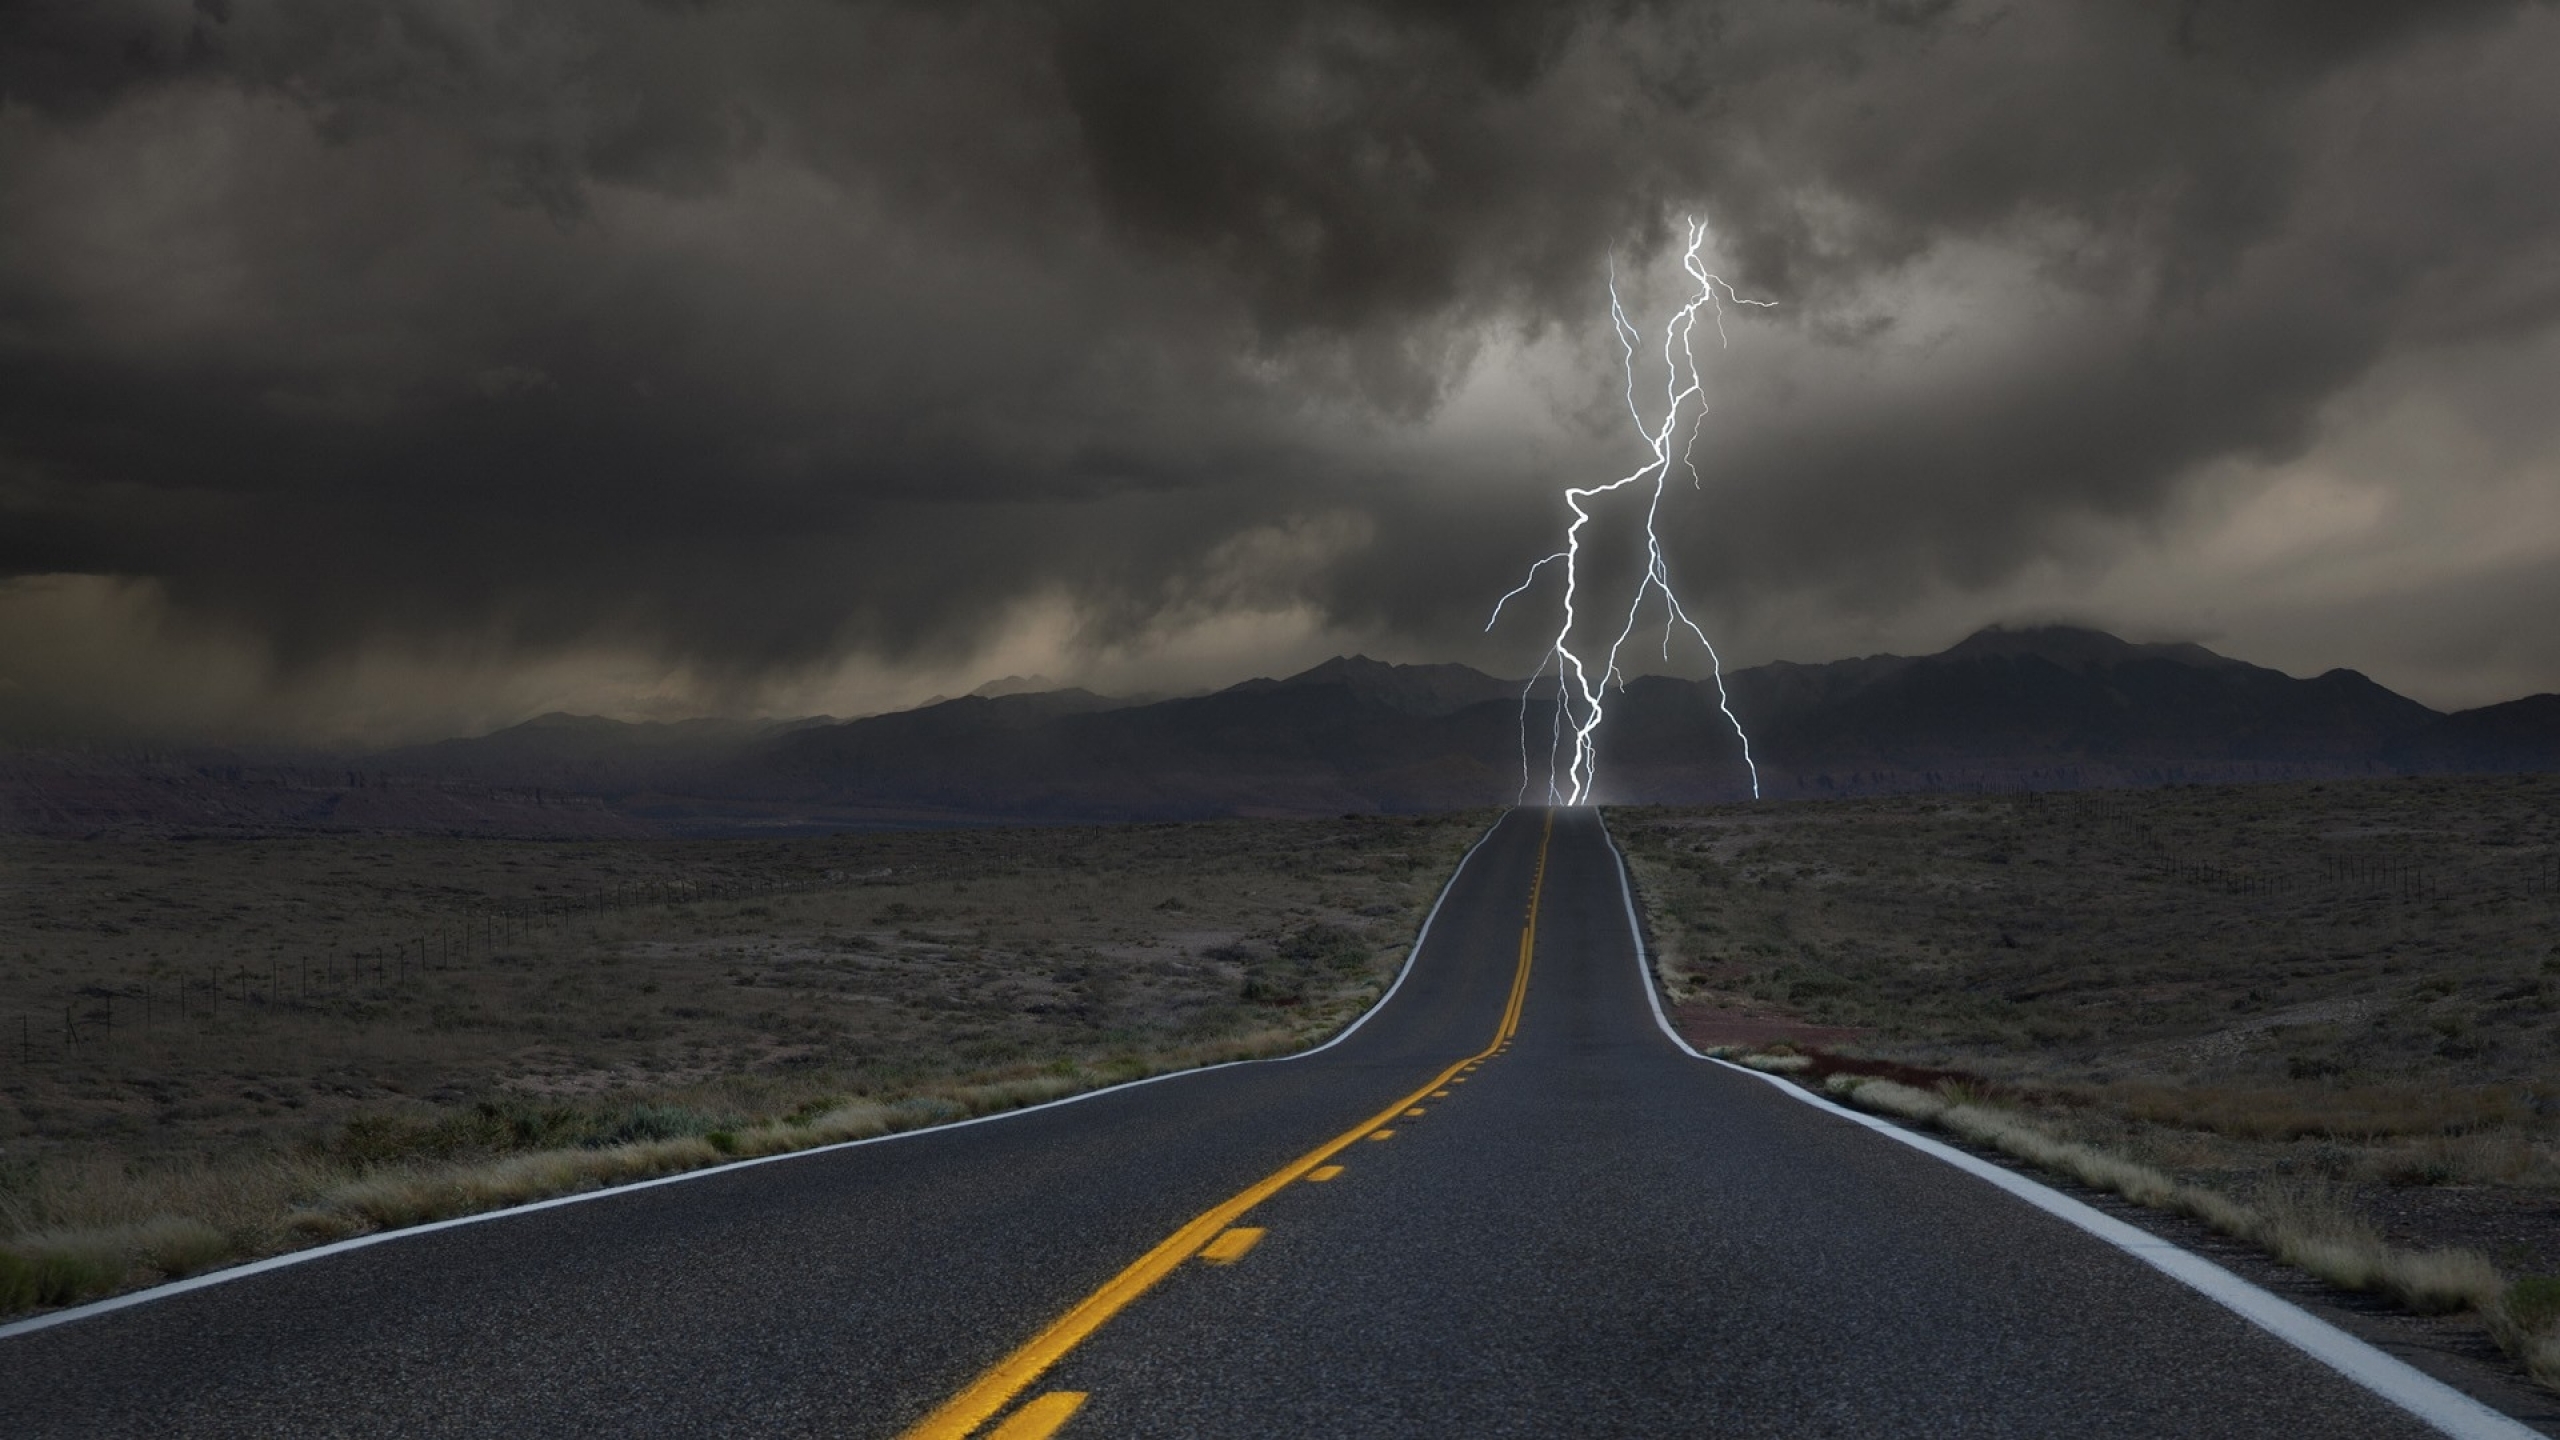 Clouds Nature Desert Storm Roads Colorado Lightning Strike